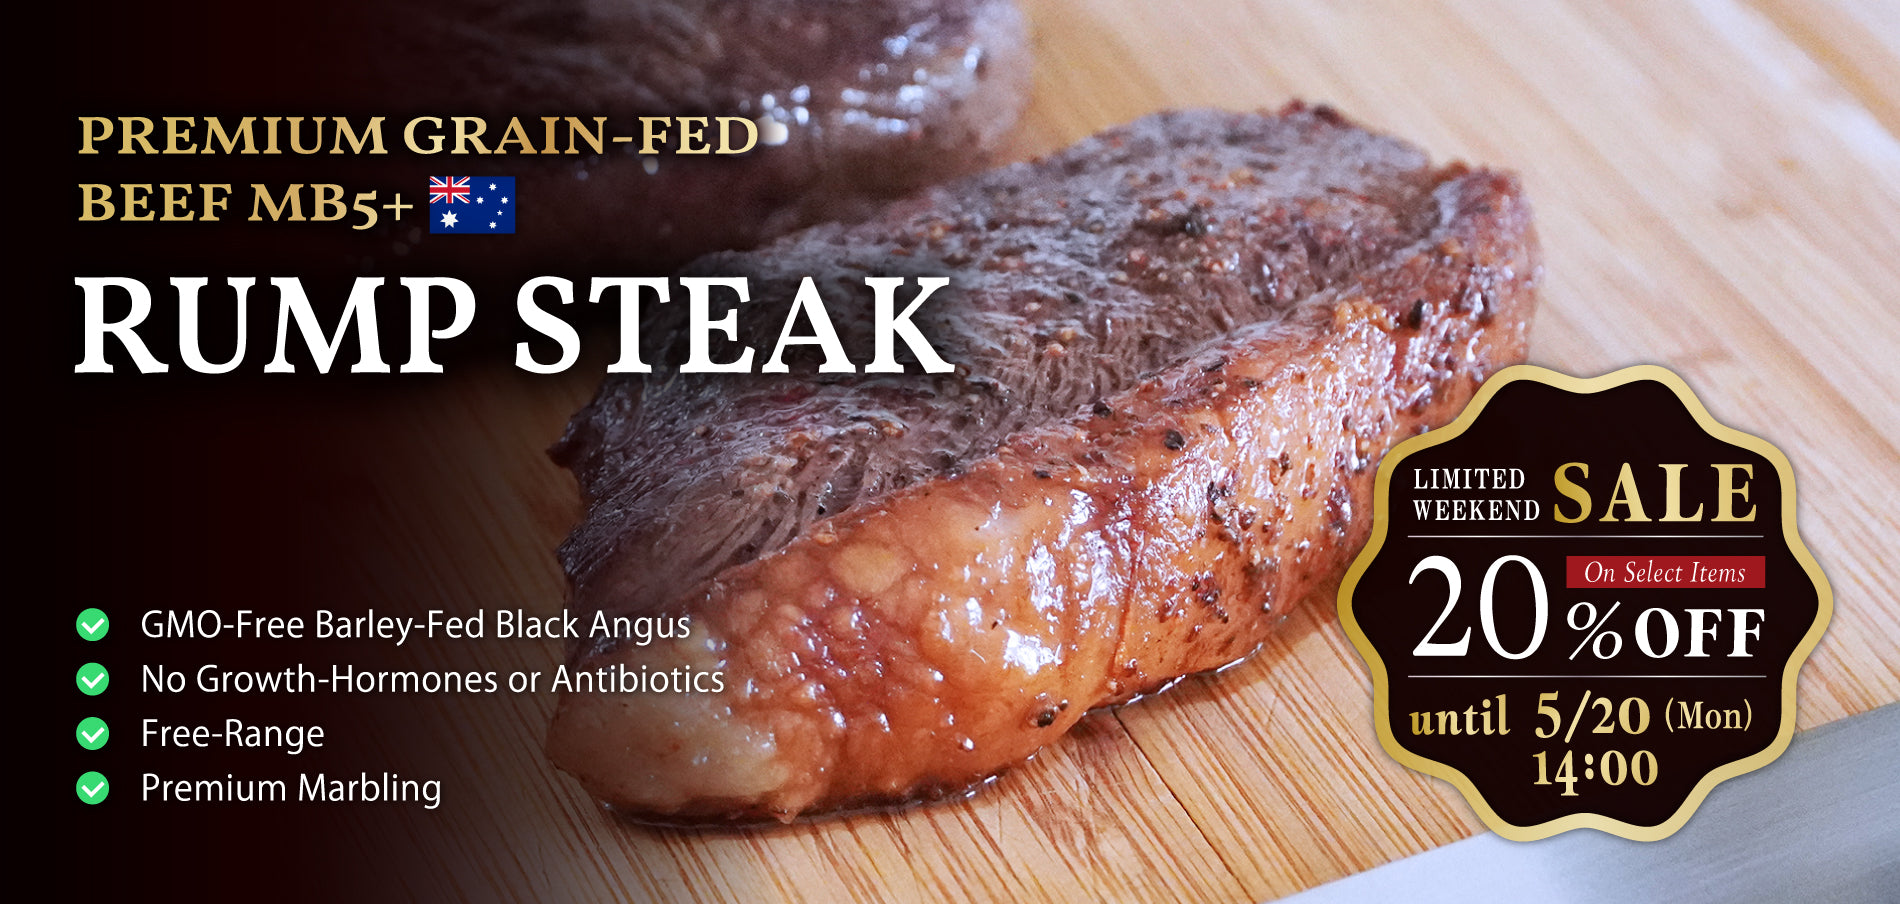 Limited Sale! 20% OFF on our Premium Grain-Fed Beef MB5+ Rump Steak.